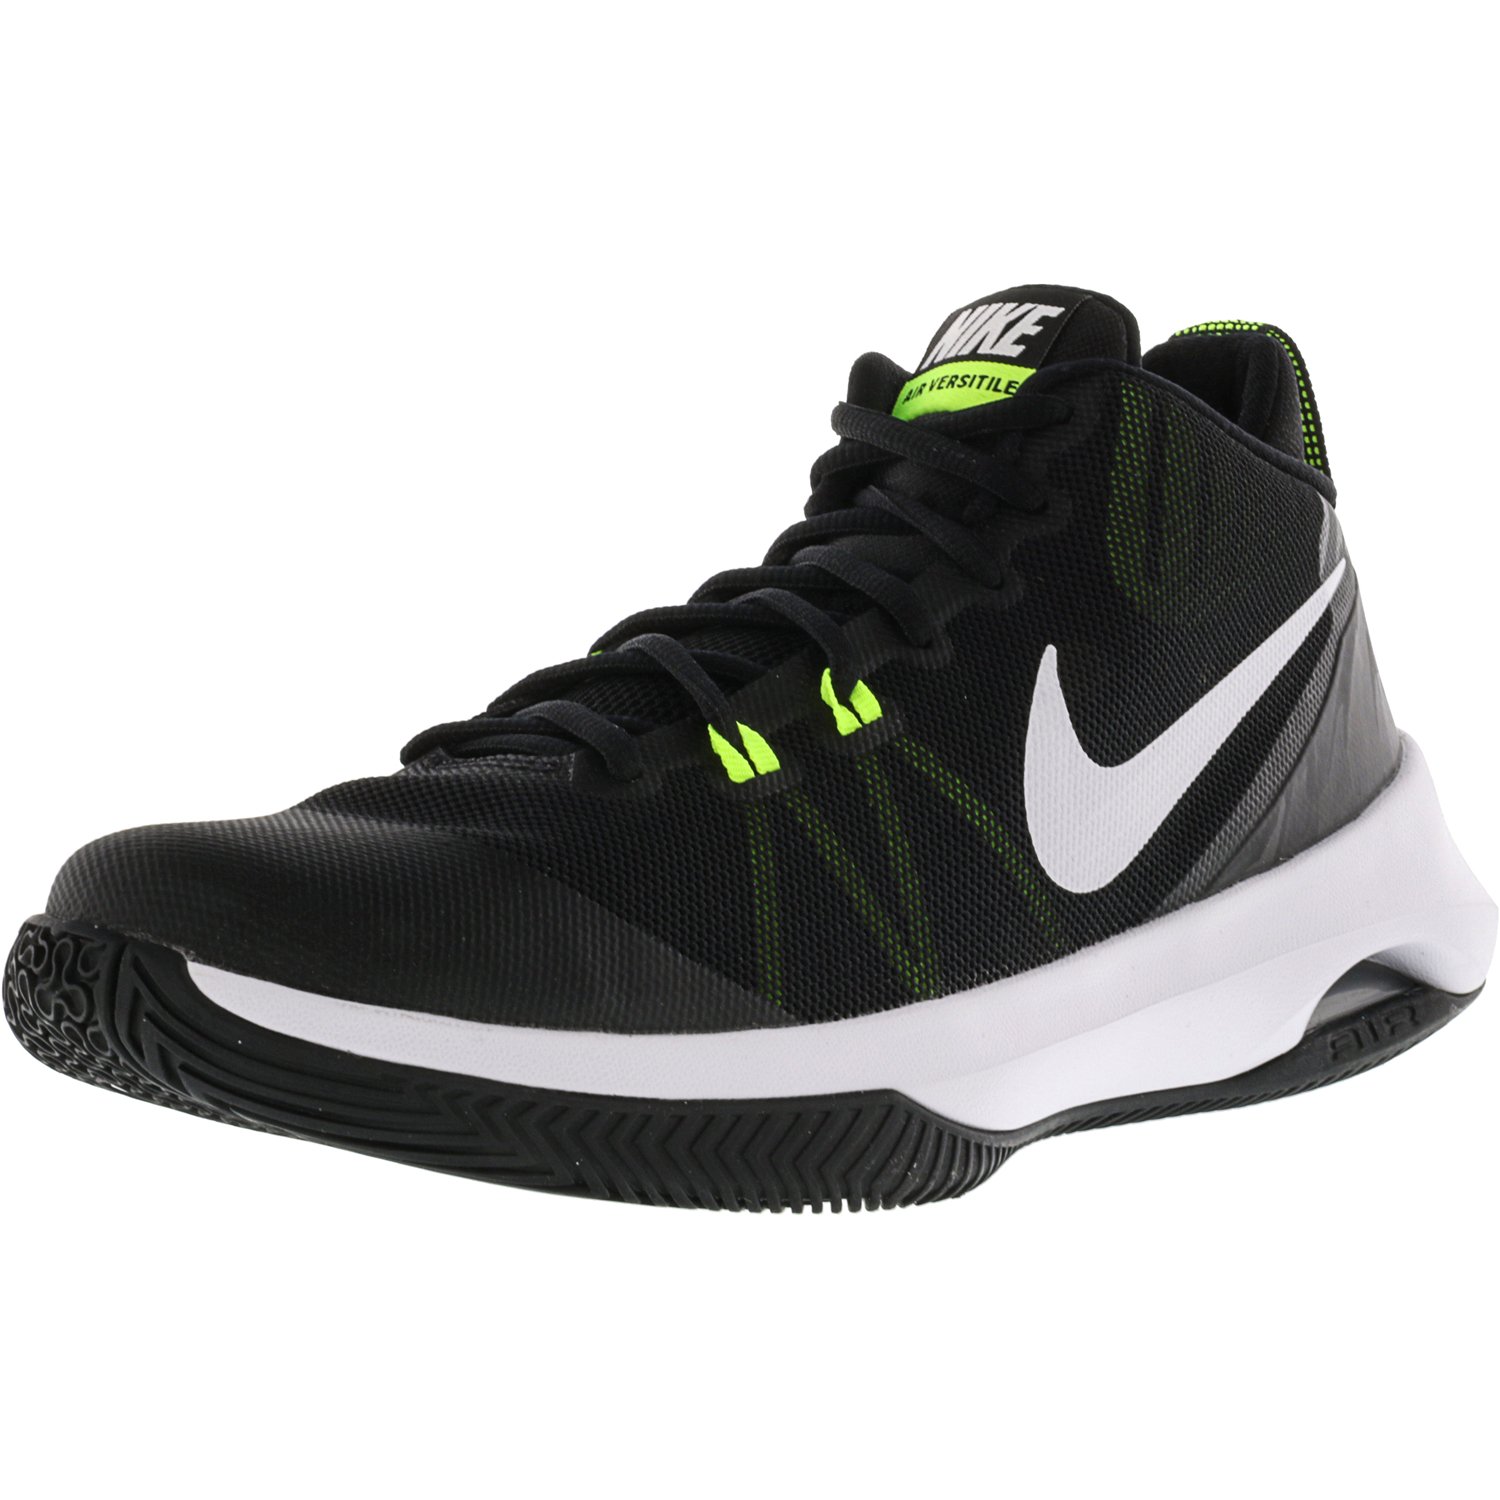 Nike Men's Air Versitile Black / White-Volt Ankle-High Fabric Tennis Shoe - 9M - image 1 of 7